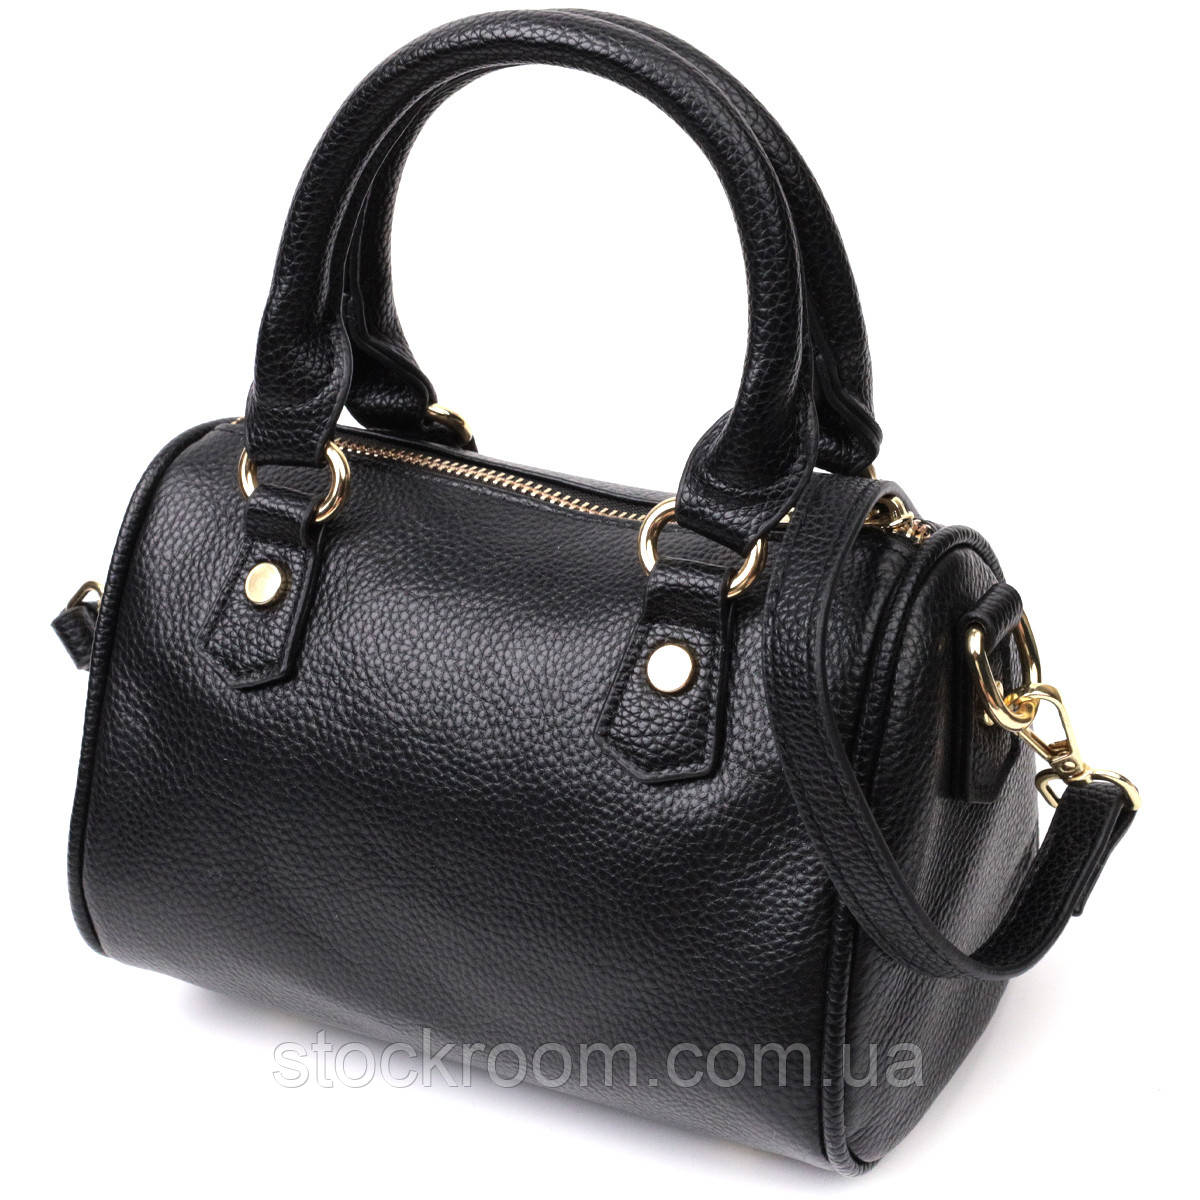 Елегантна жіноча сумка-бочечка з двома ручками з натуральної шкіри Vintage 22353 Чорна